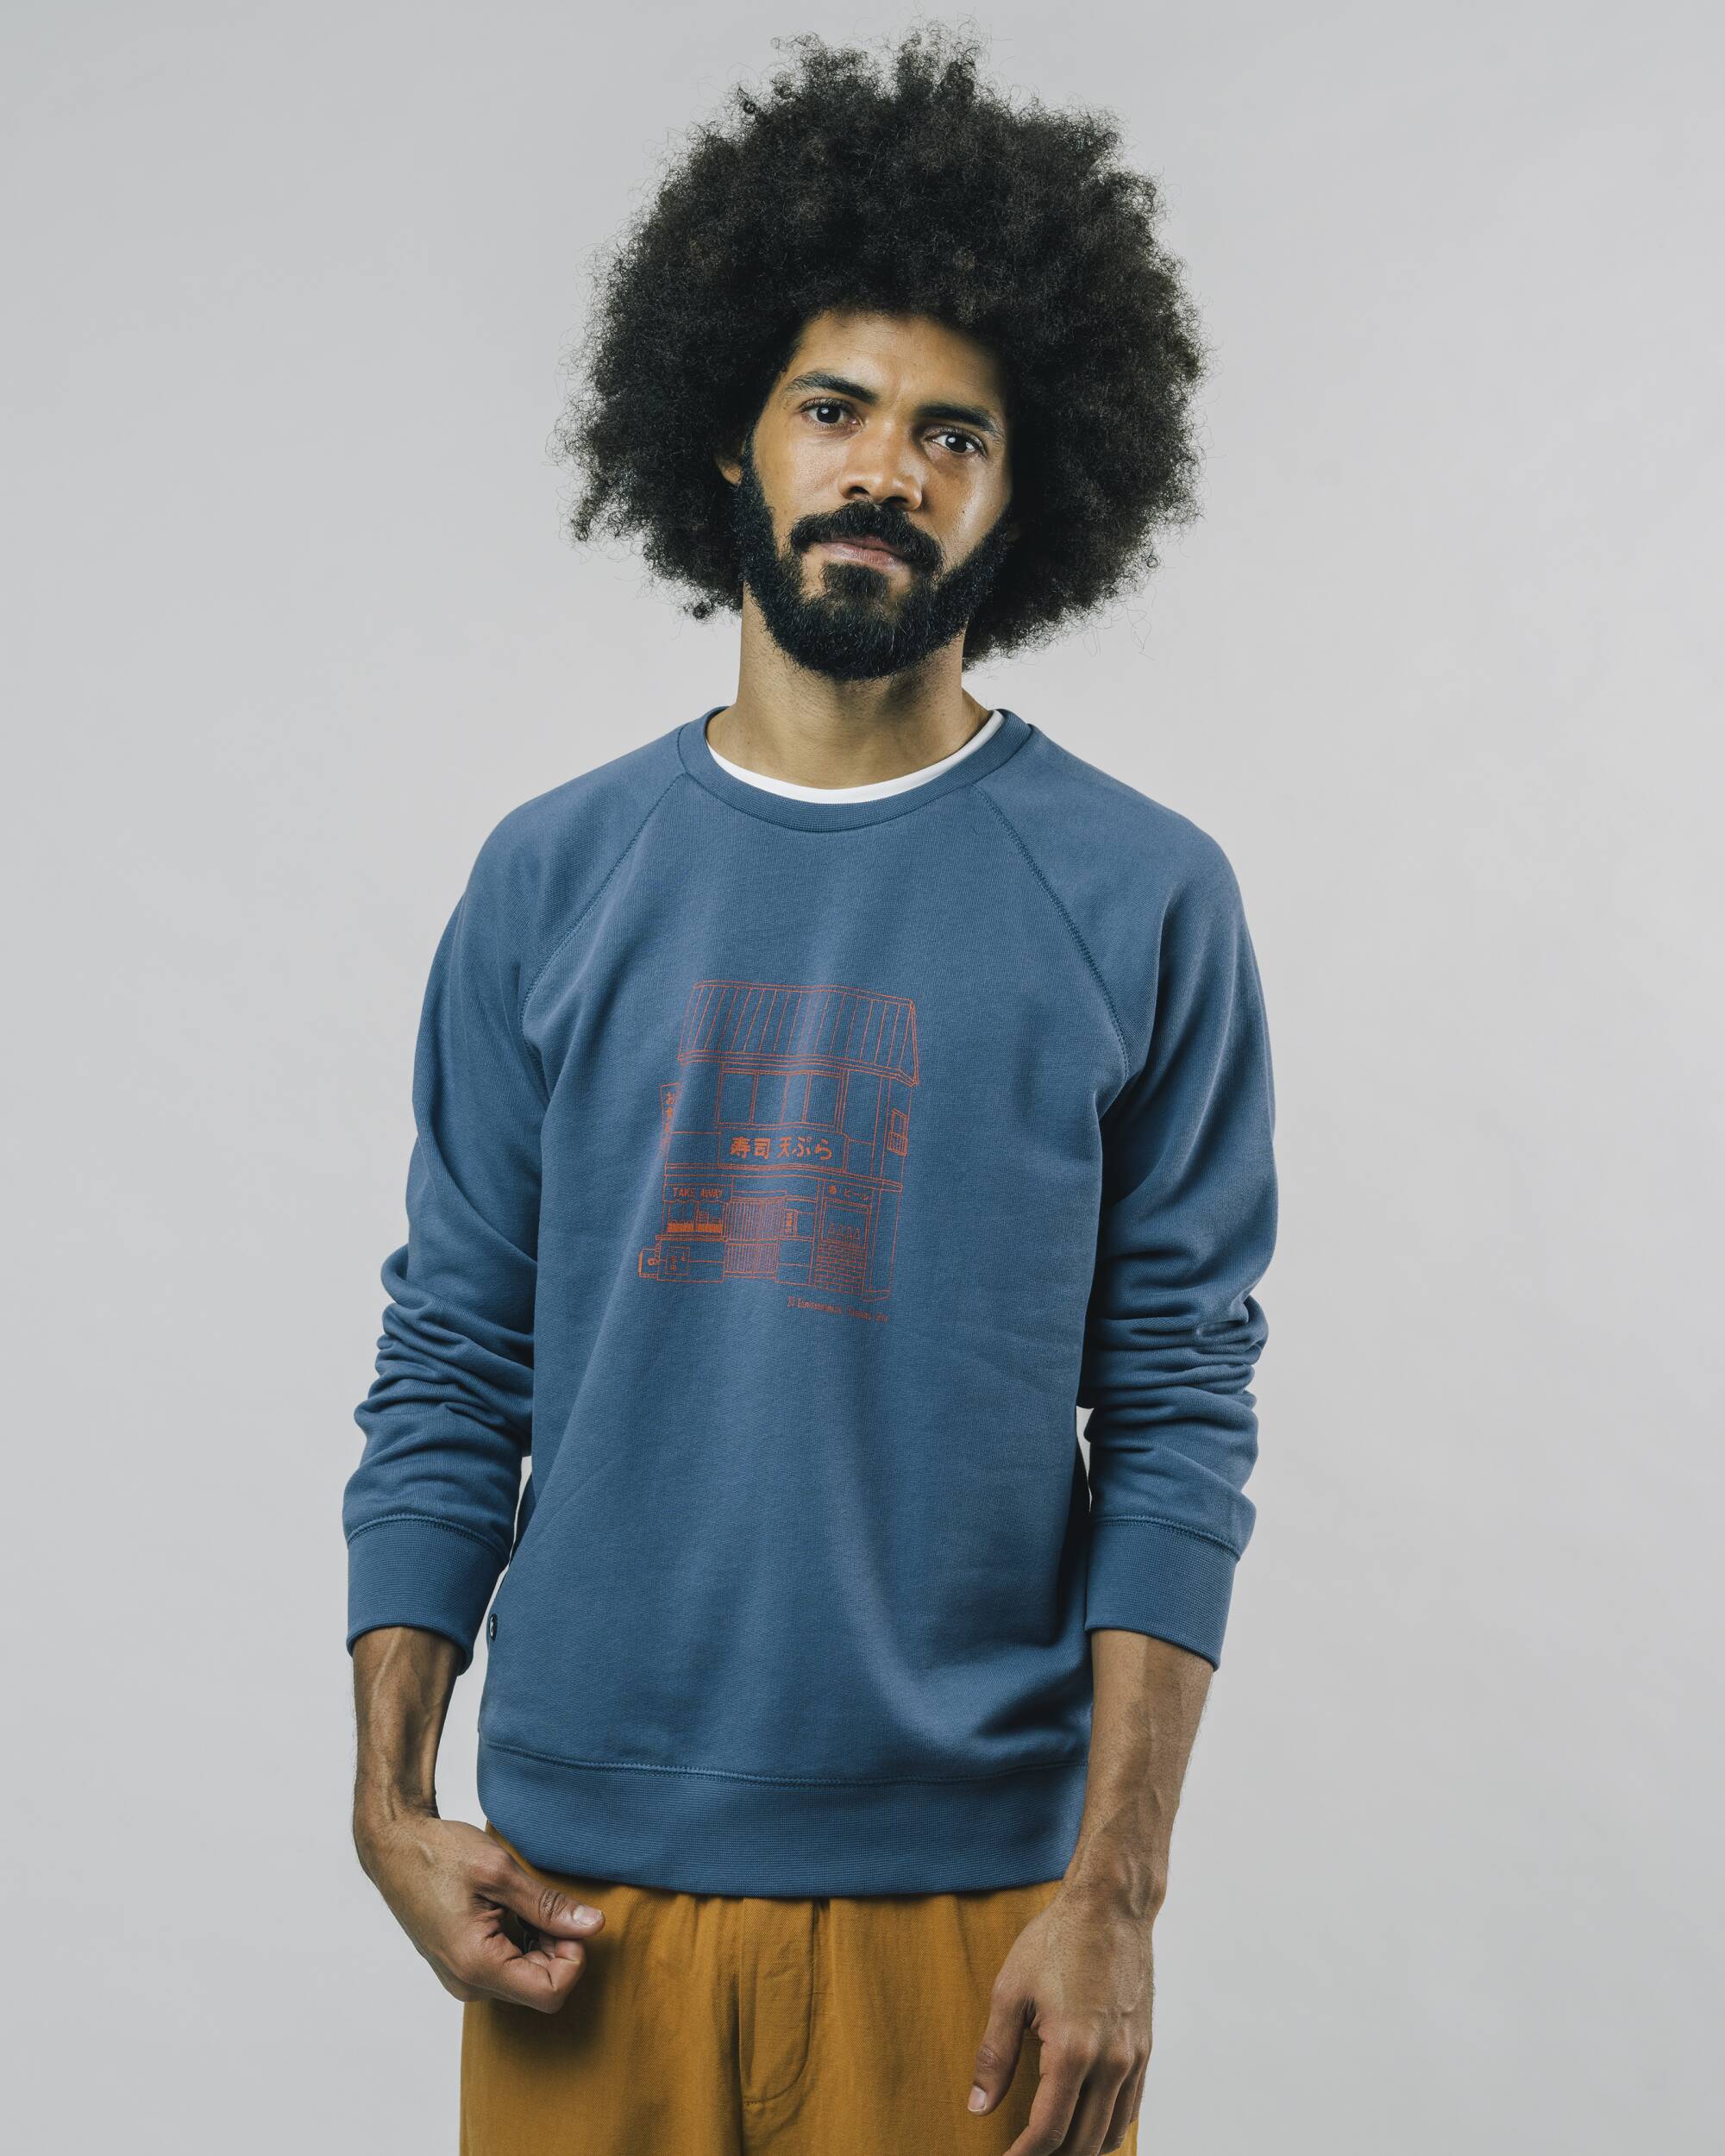 Blue Take Away sweater made from 100% organic cotton from Brava Fabrics